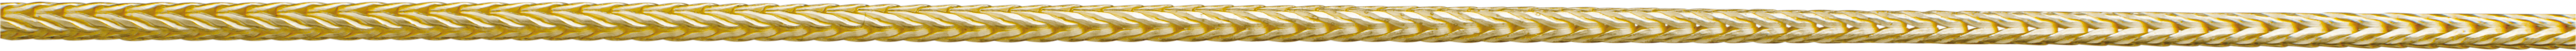 Fox tail chain gold 585/-Gg Ø 1,50mm